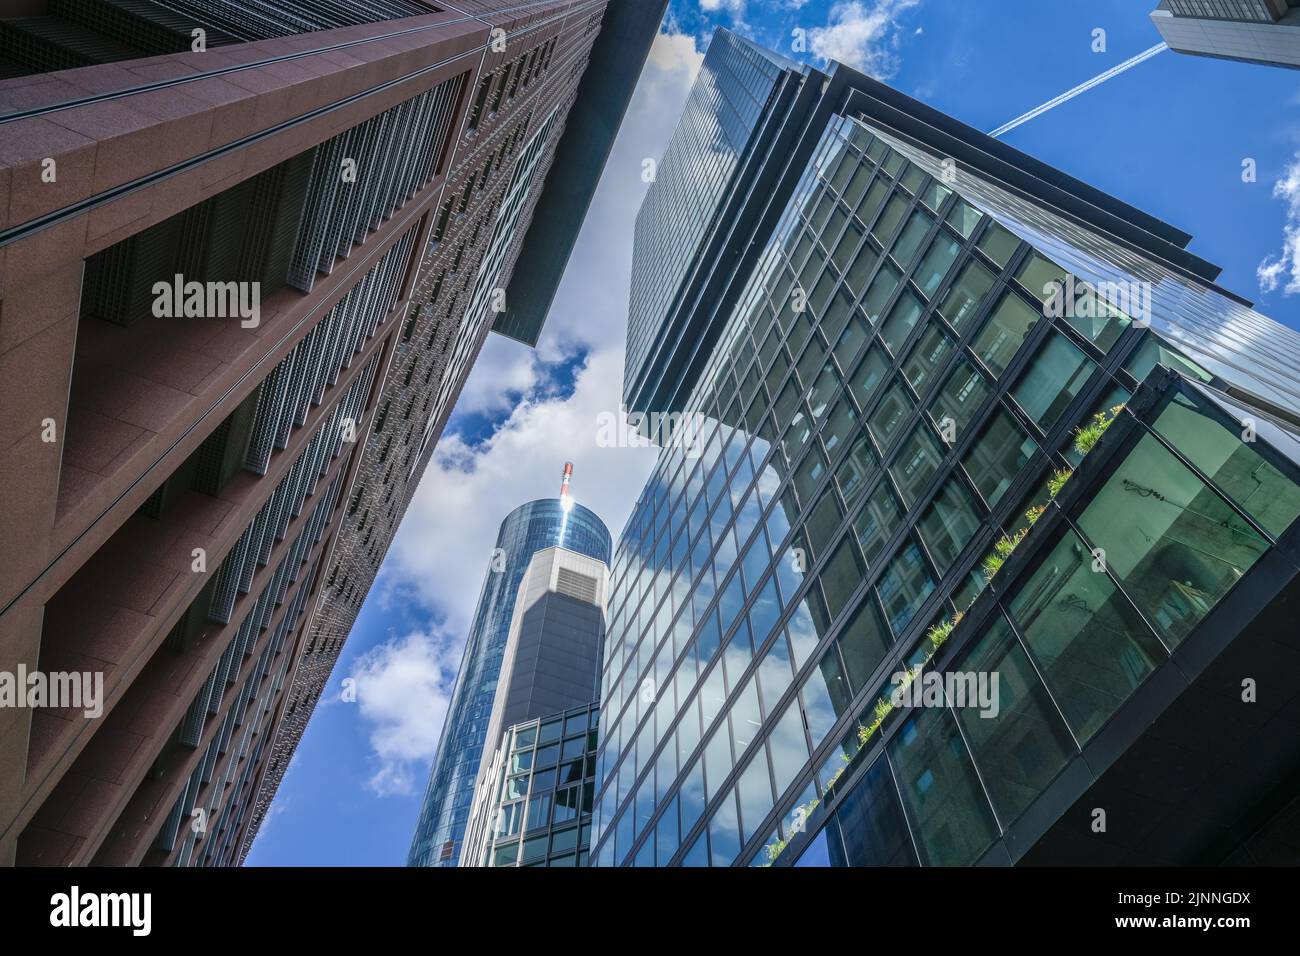 Skyscrapers, Omniturm, Taunustor, banking district, Grosse Gallusstrasse, Frankfurt am Main, Hesse, Germany Stock Photo